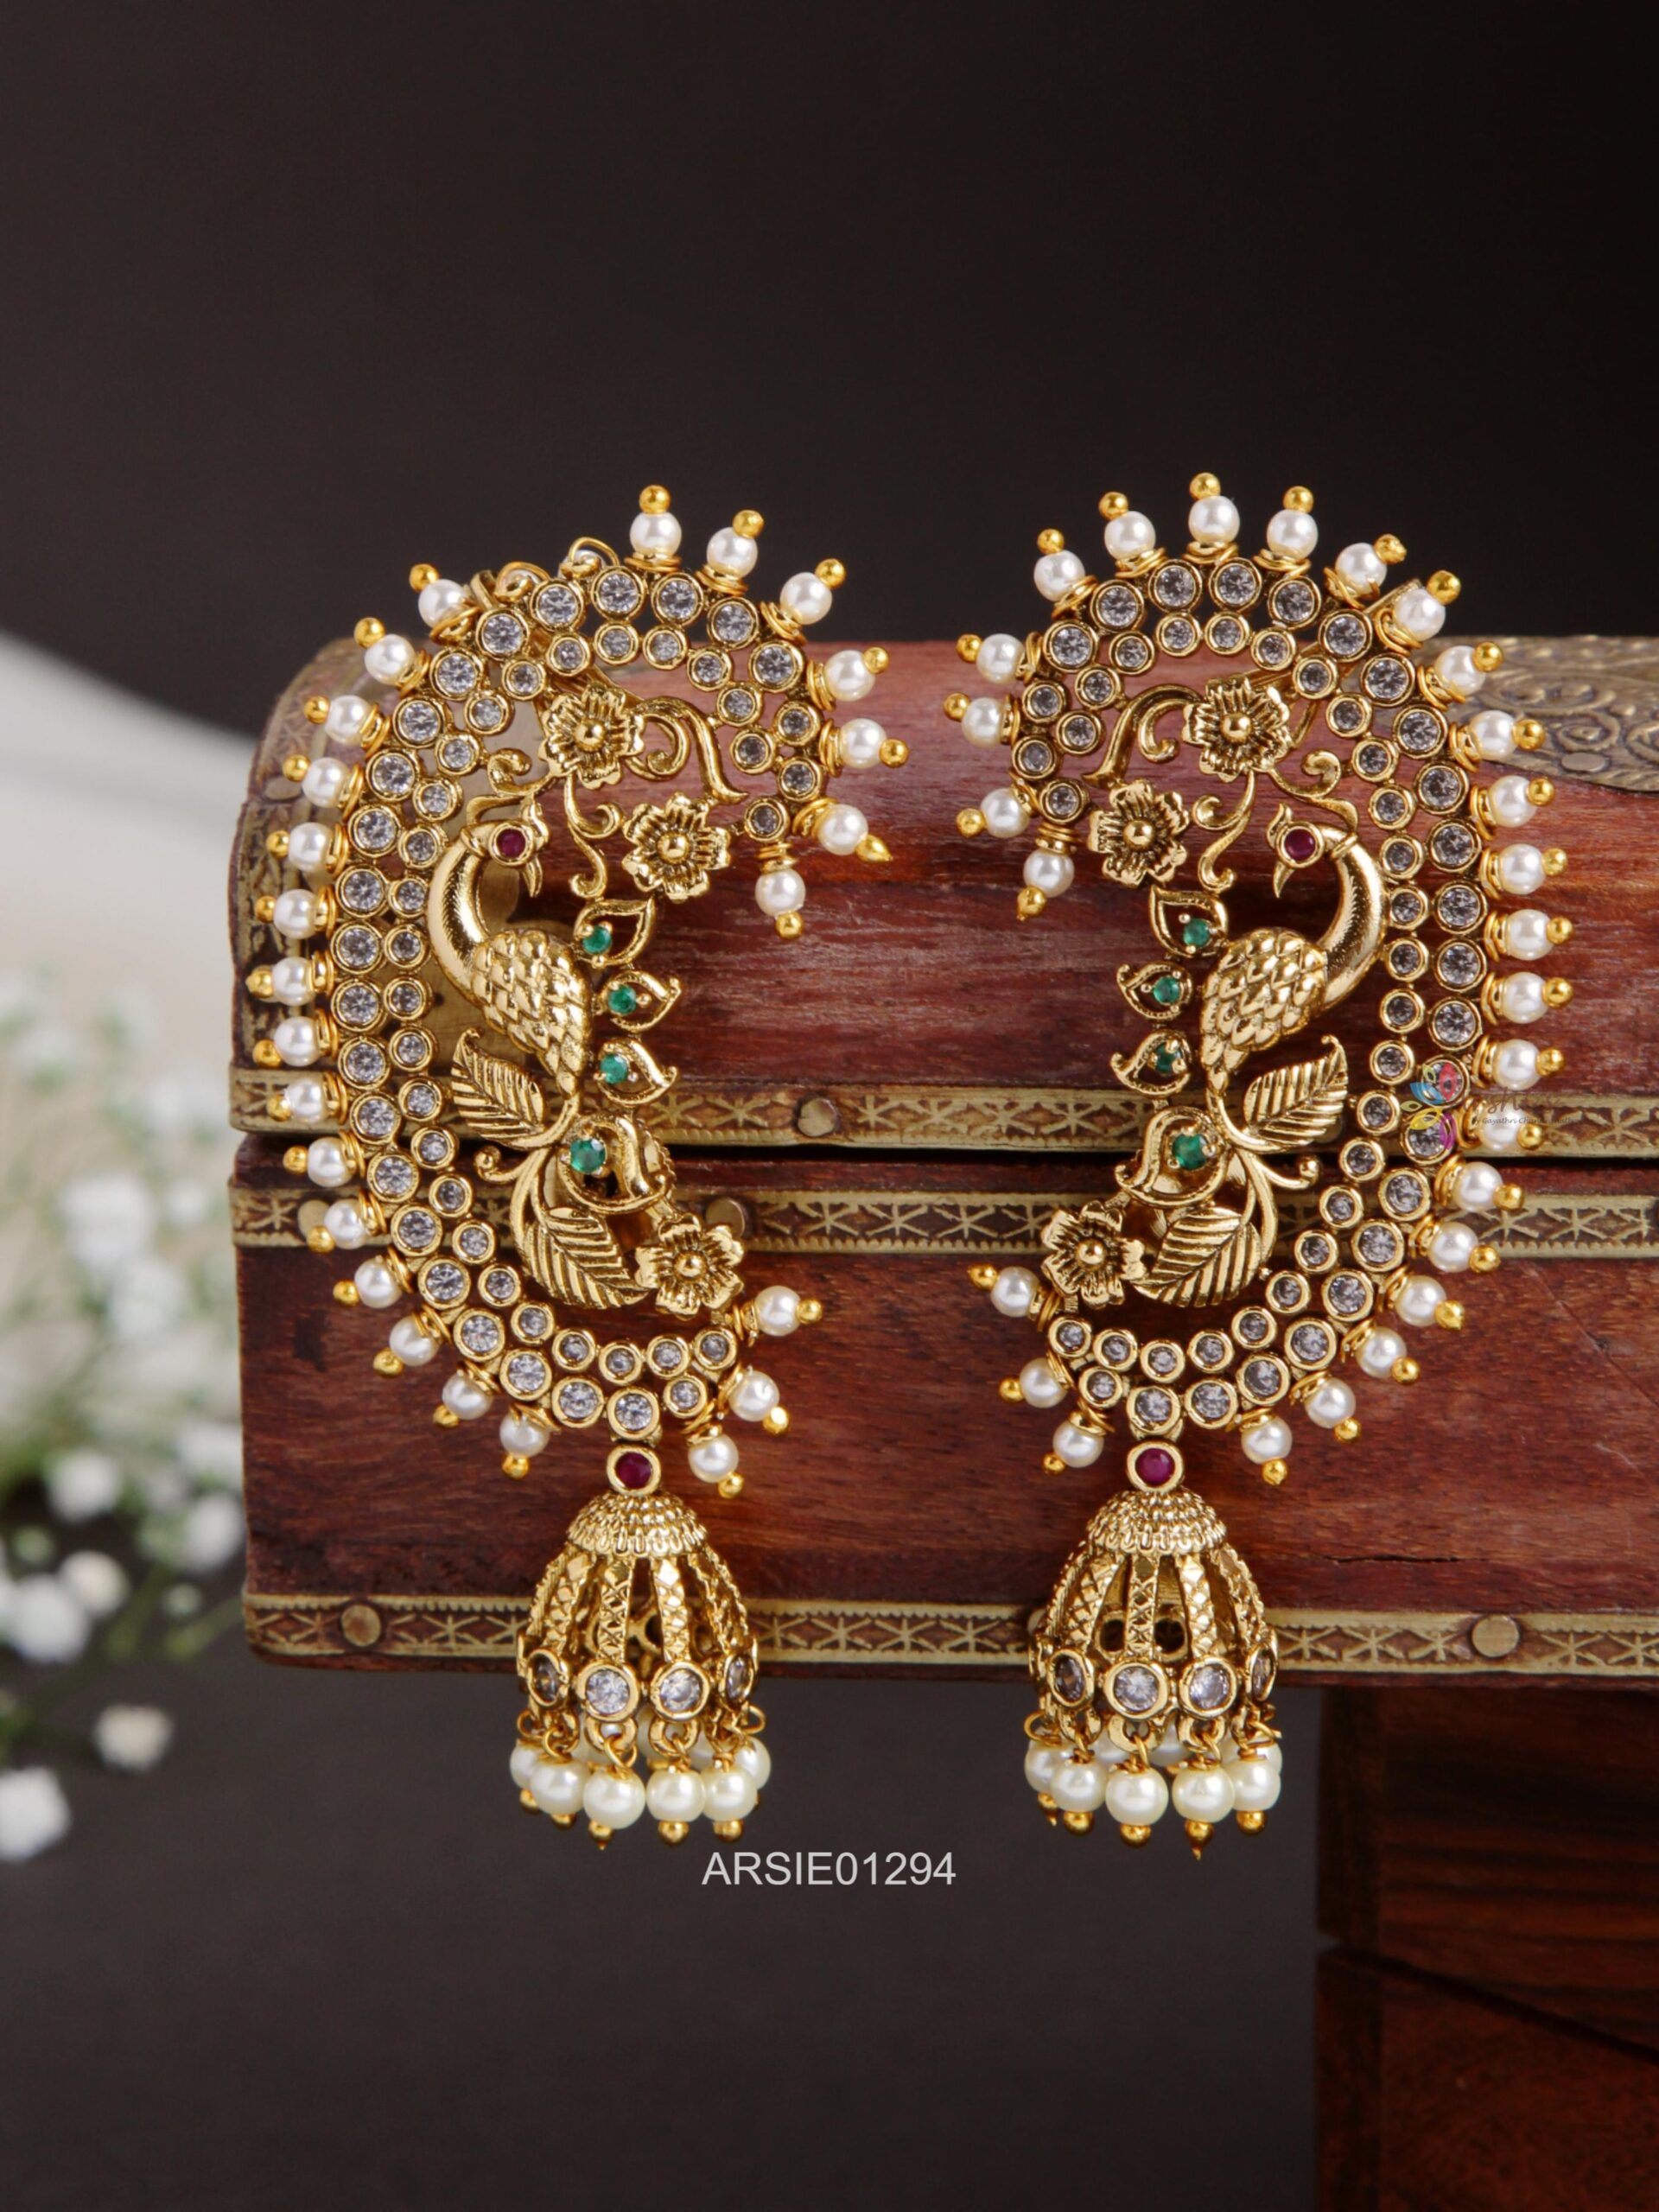 Ear Cuffs Gold Ear Cuffs For Beautiful Bride at Rs 825.00 | Earring Cuffs,  Cuff Earrings, ईयर कफ - Beeline, Pune | ID: 2849525173055